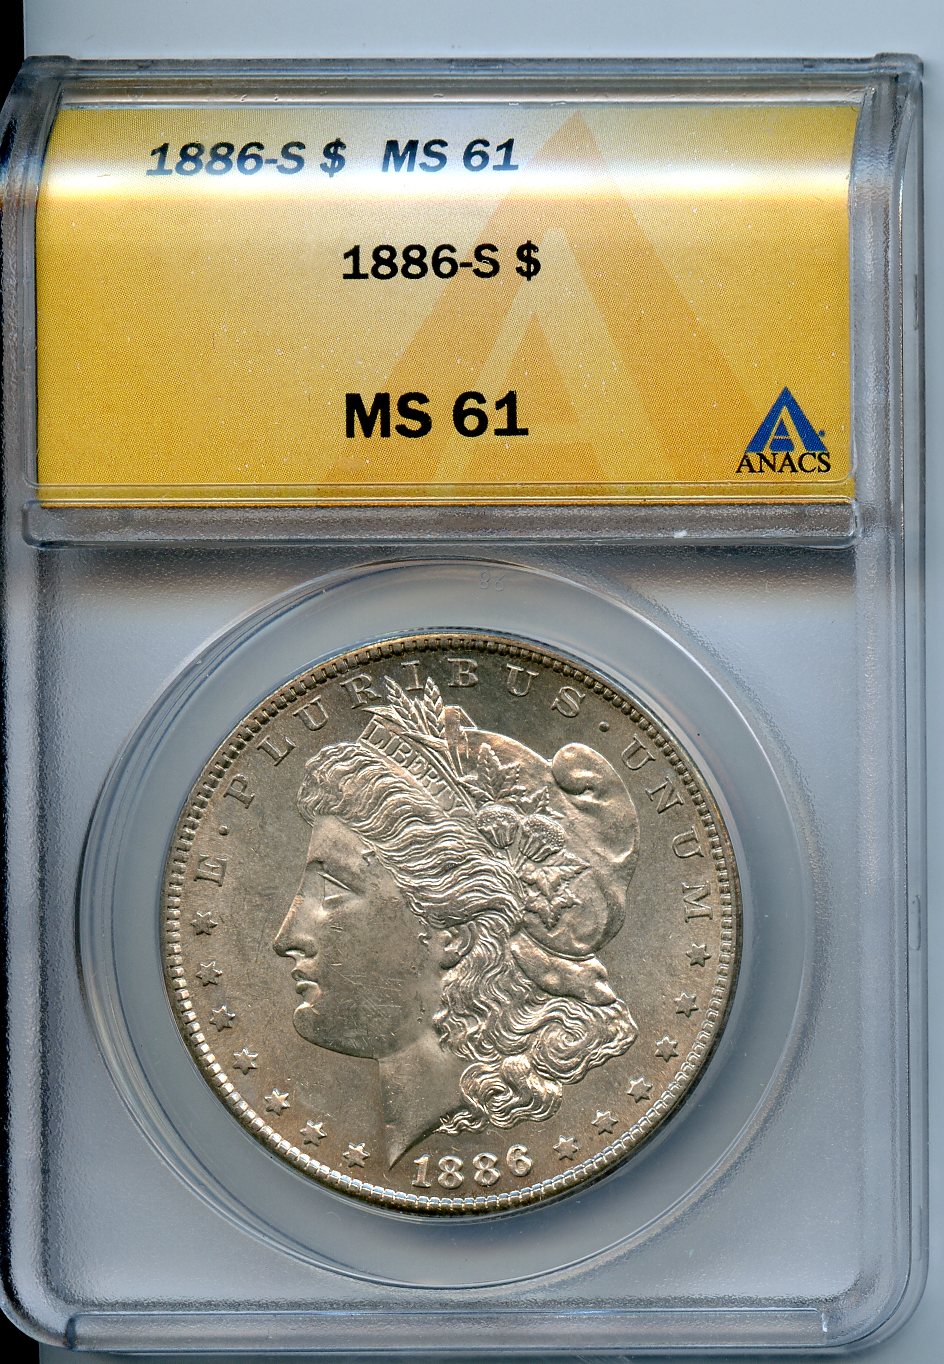 1886 S  $1  ANACS  MS61  Morgan Dollar